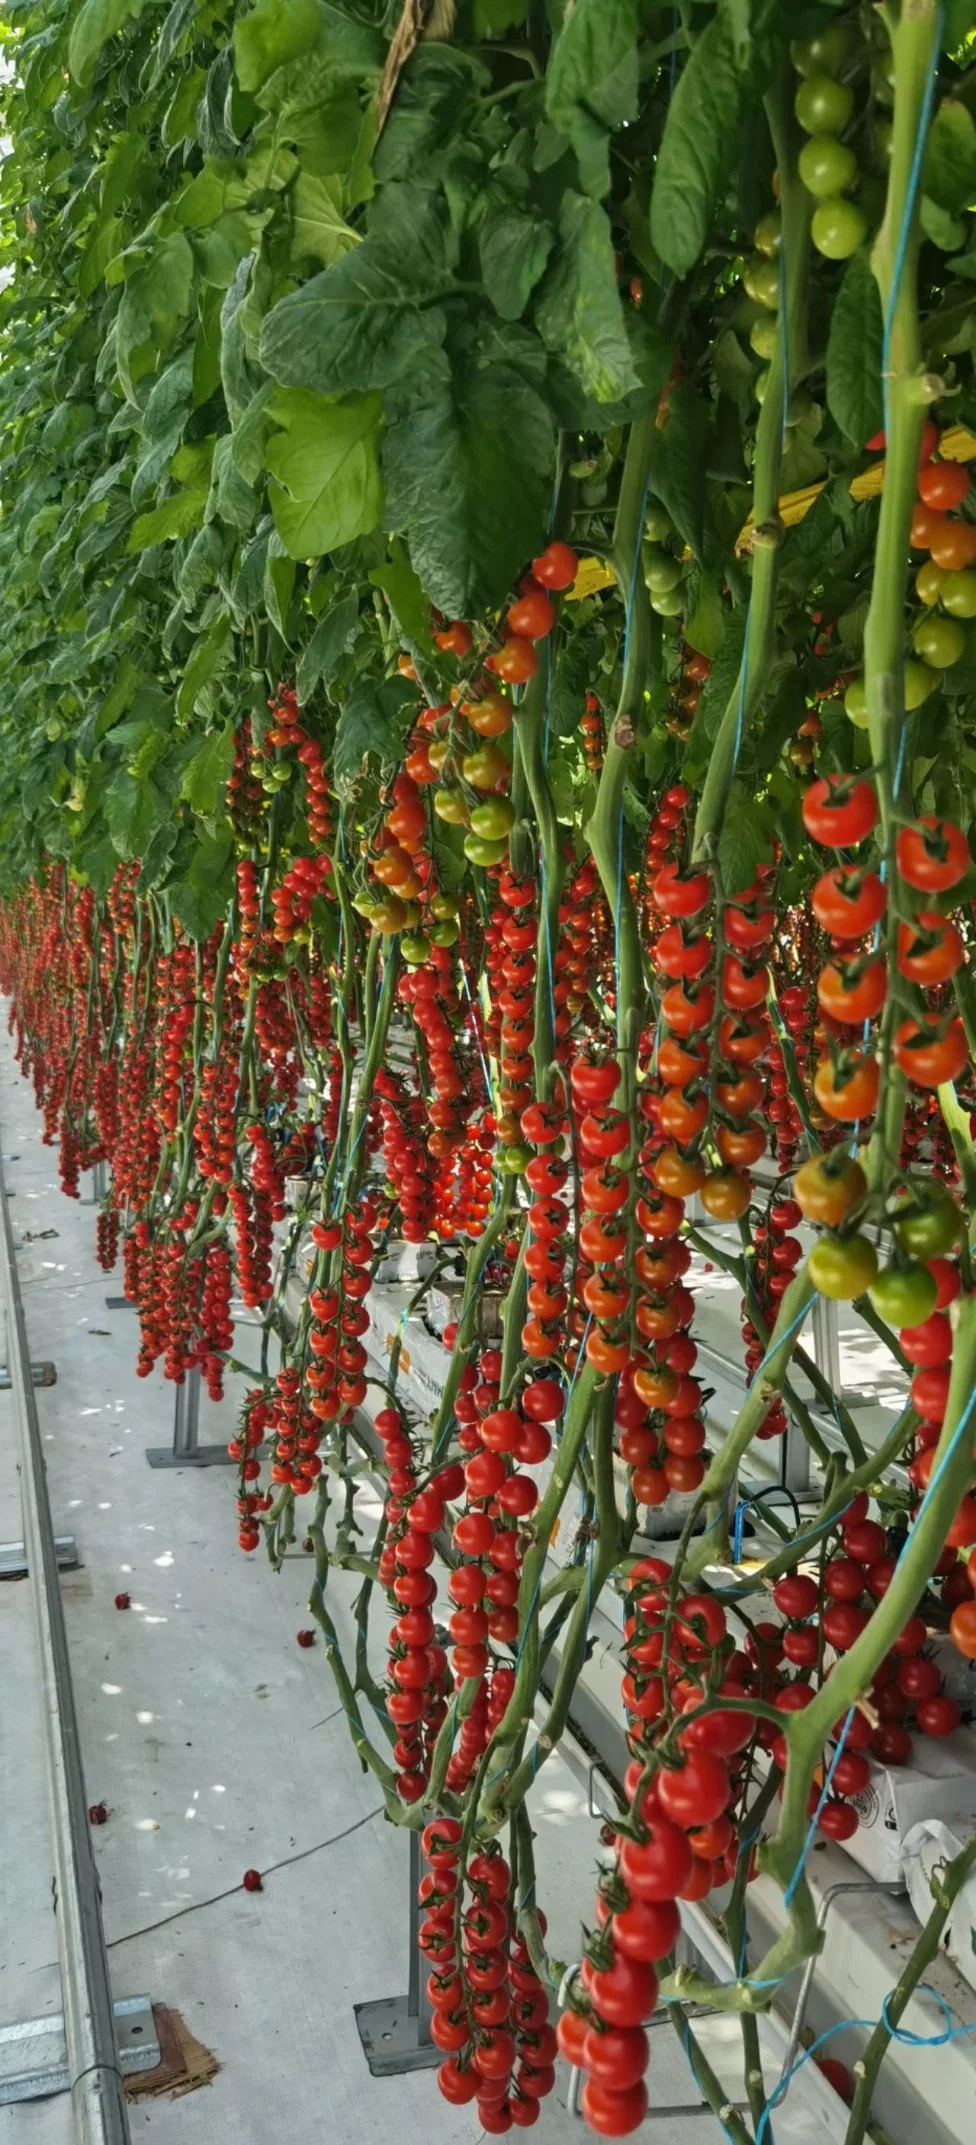 Tomato Greenhouse/ Irrigation Hydroponic System